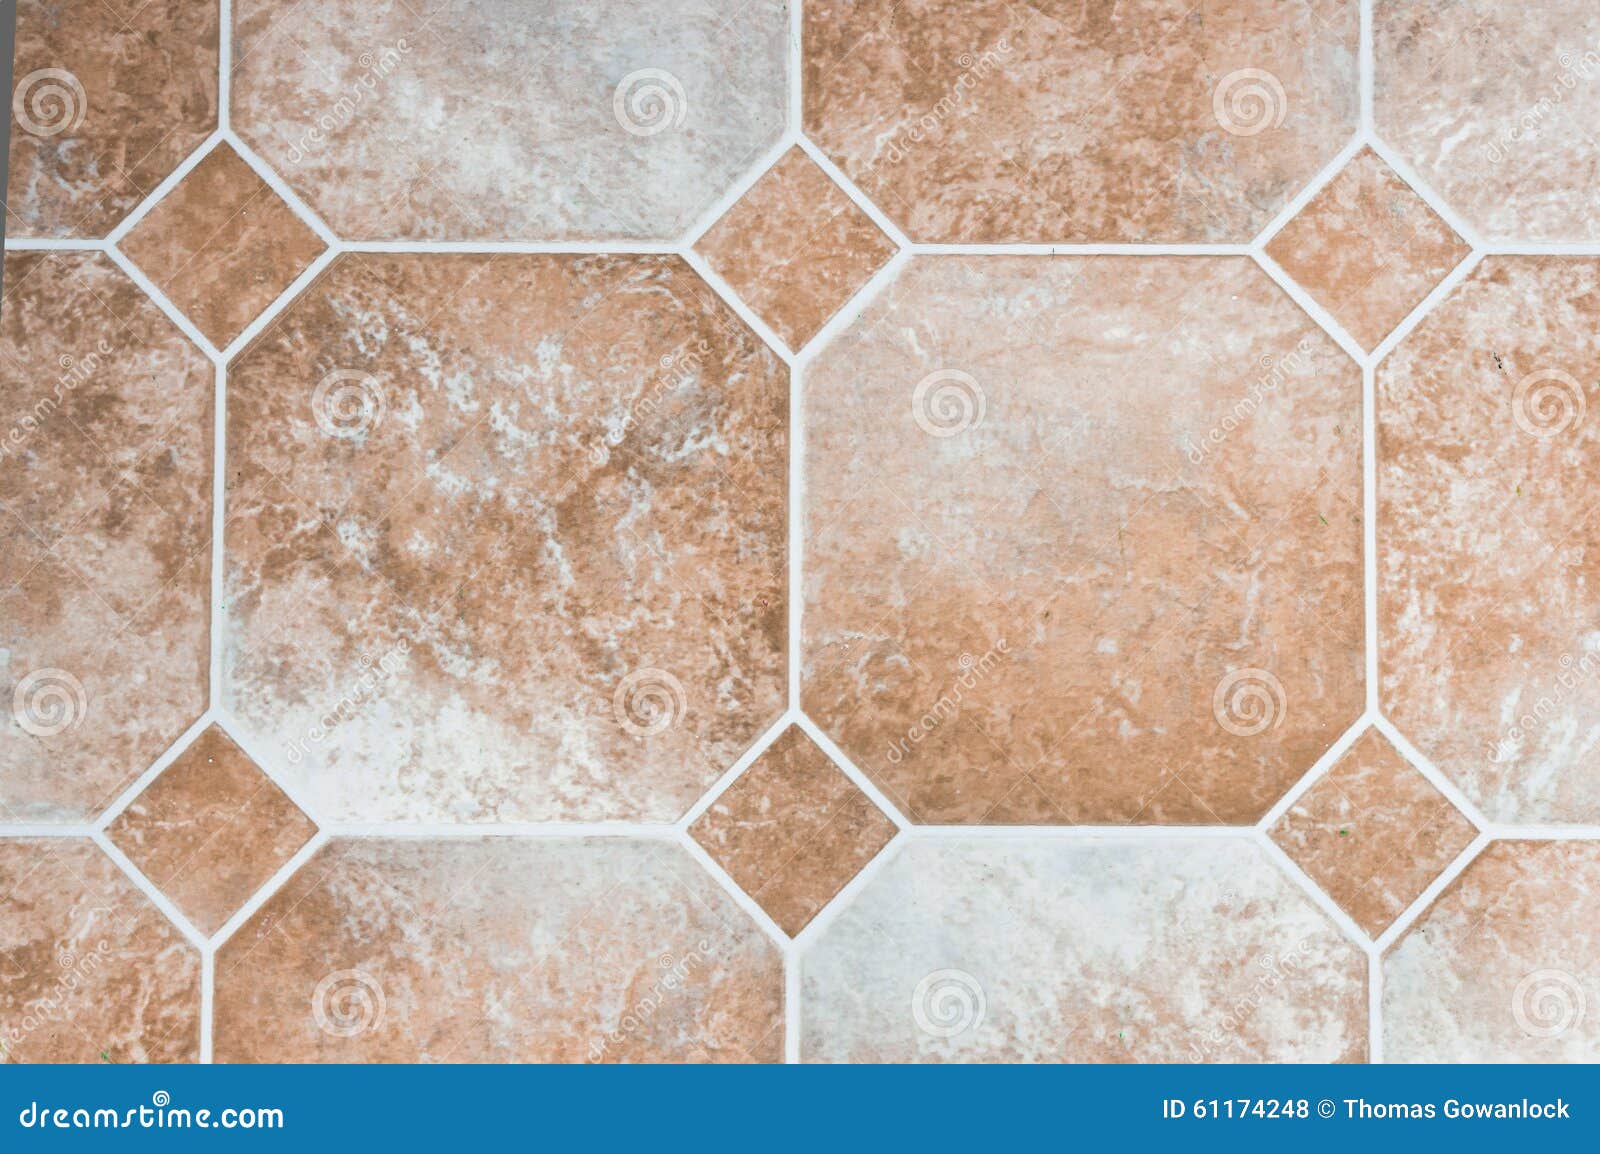 Vinyl Tiles Stock Photo Image Of Backdrop Pattern Covering